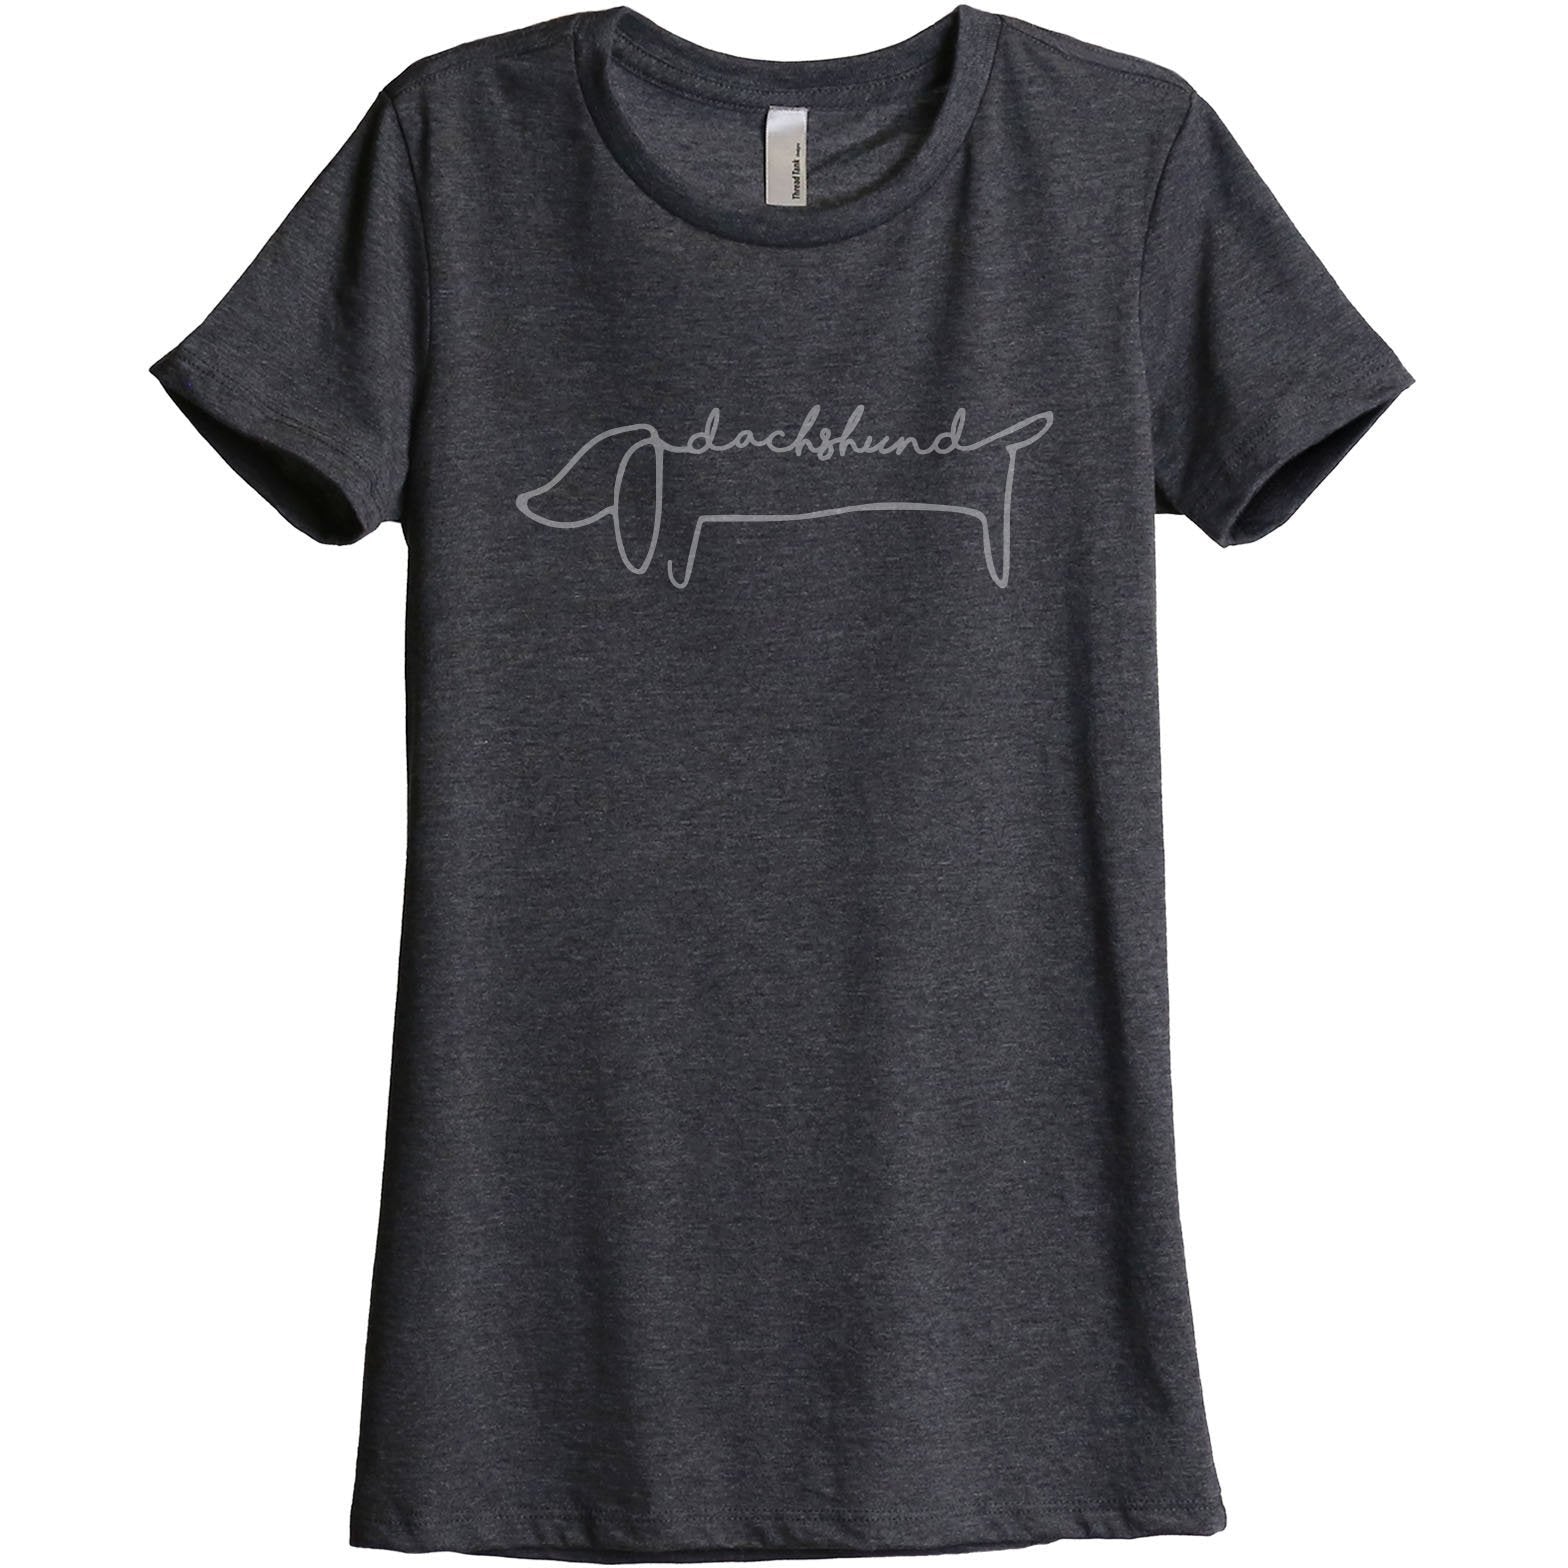 Dachshund Line Art Women's Relaxed Crewneck T-Shirt Top Tee Charcoal Grey
